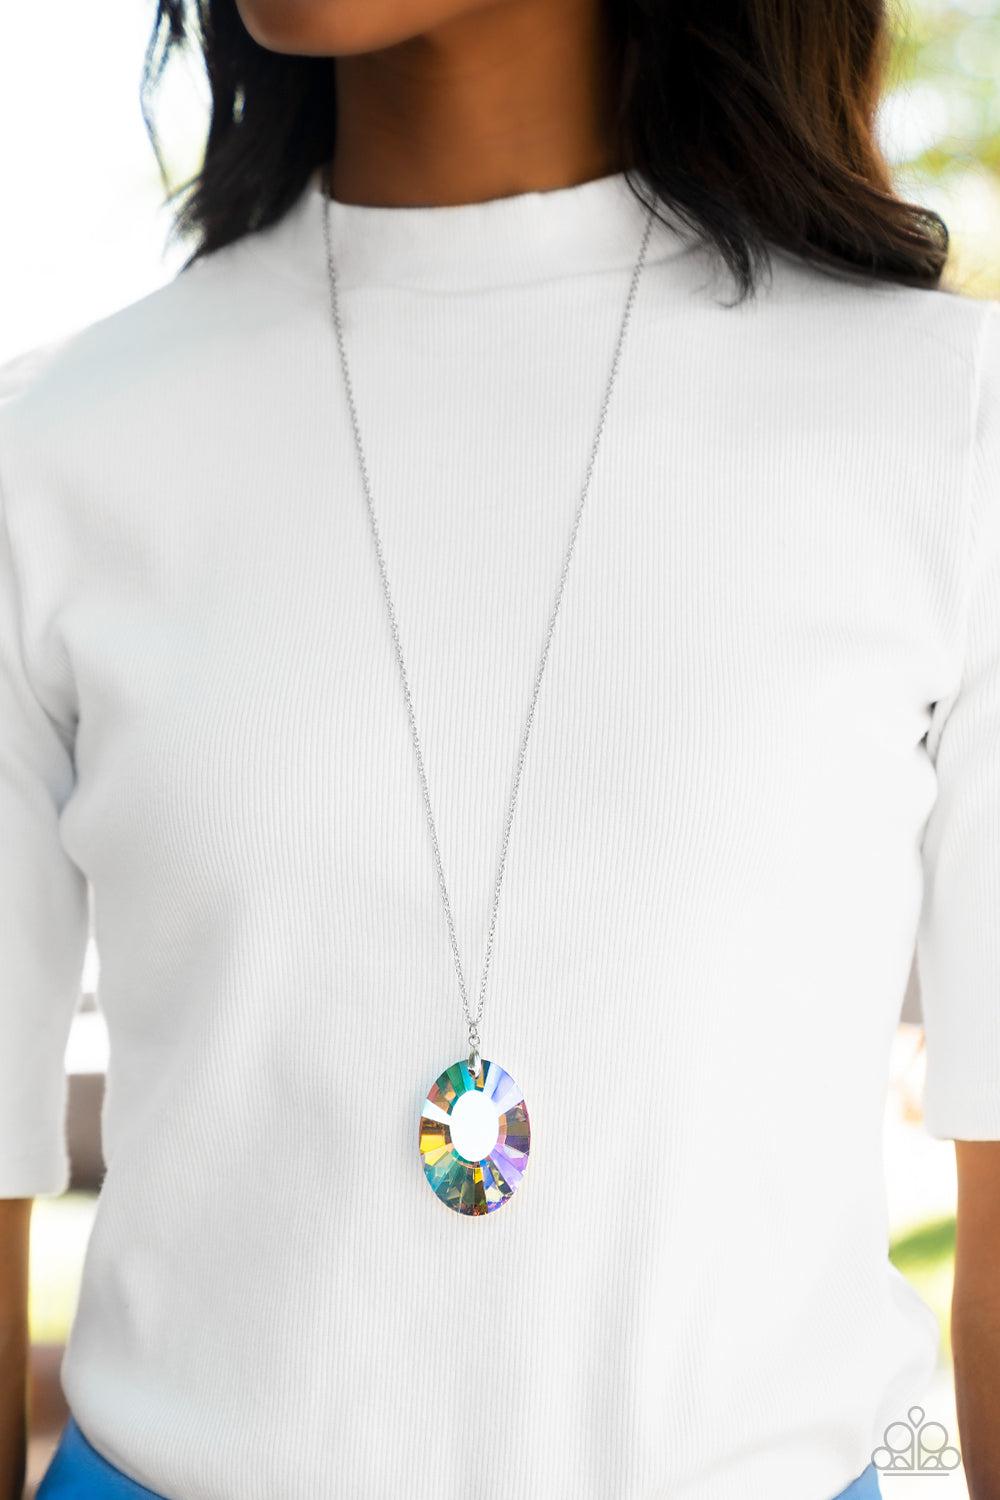 Celestial Essence Multi Iridescent Gem Necklace - Paparazzi Accessories-on model - CarasShop.com - $5 Jewelry by Cara Jewels